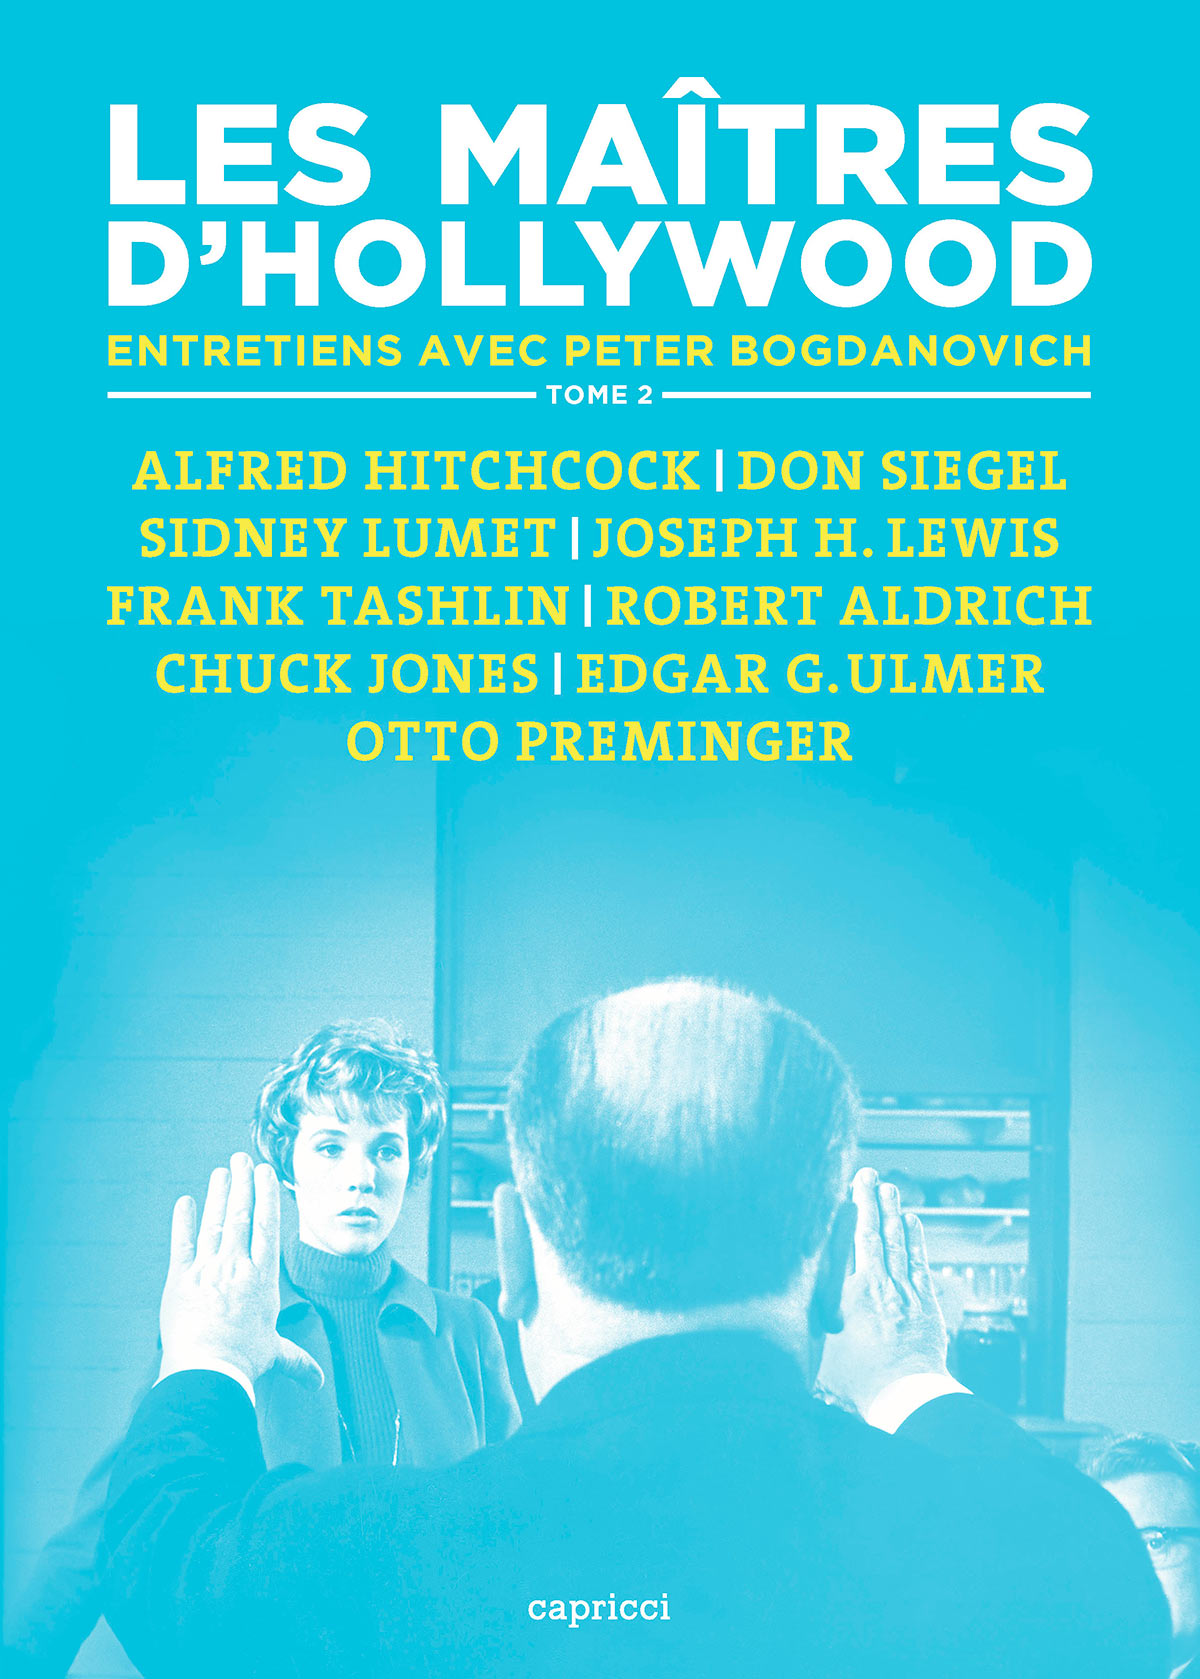 Les Maîtres d'Hollywood, entretiens avec Peter Bogdanovich - Tome 2